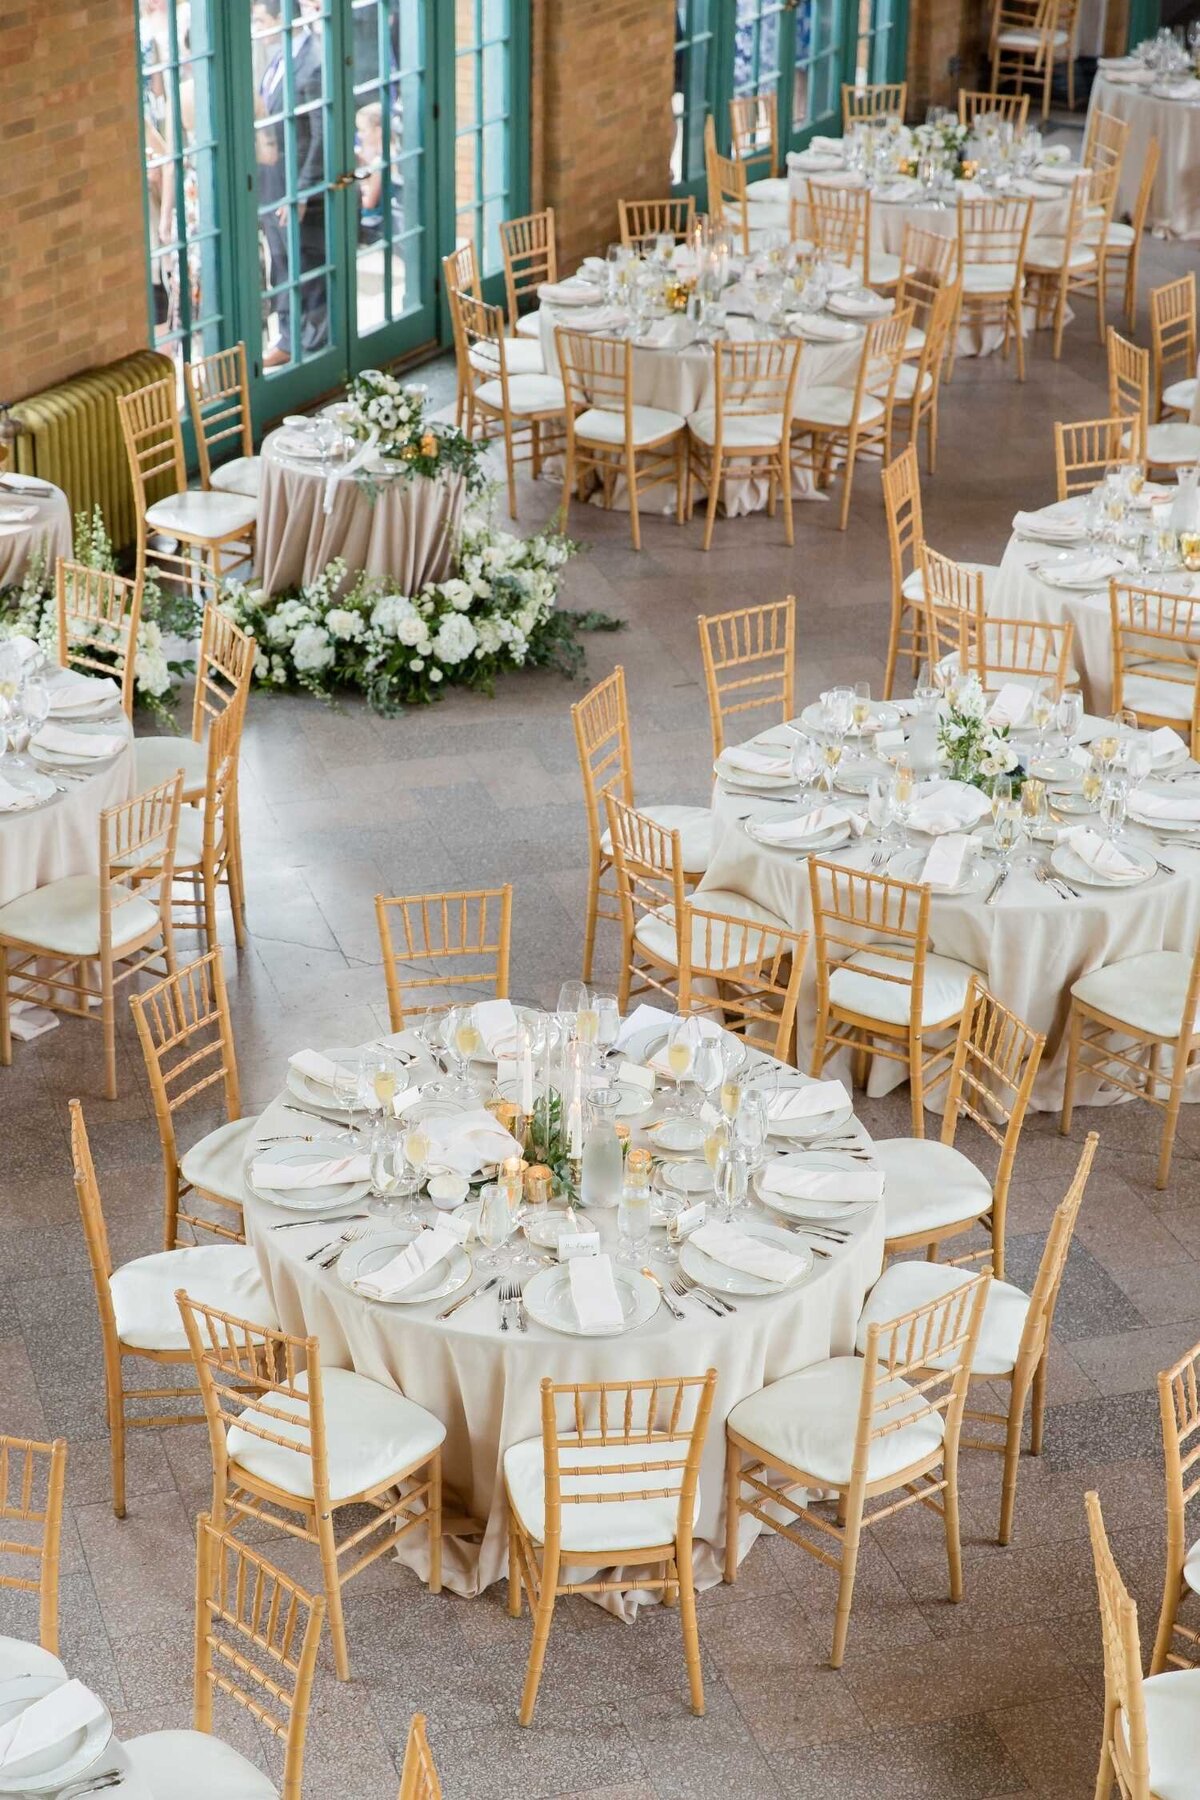 Wedding Reception Decor at Columbus Park Refectory for a Luxury Chicago Outdoor Historic Wedding Venue.